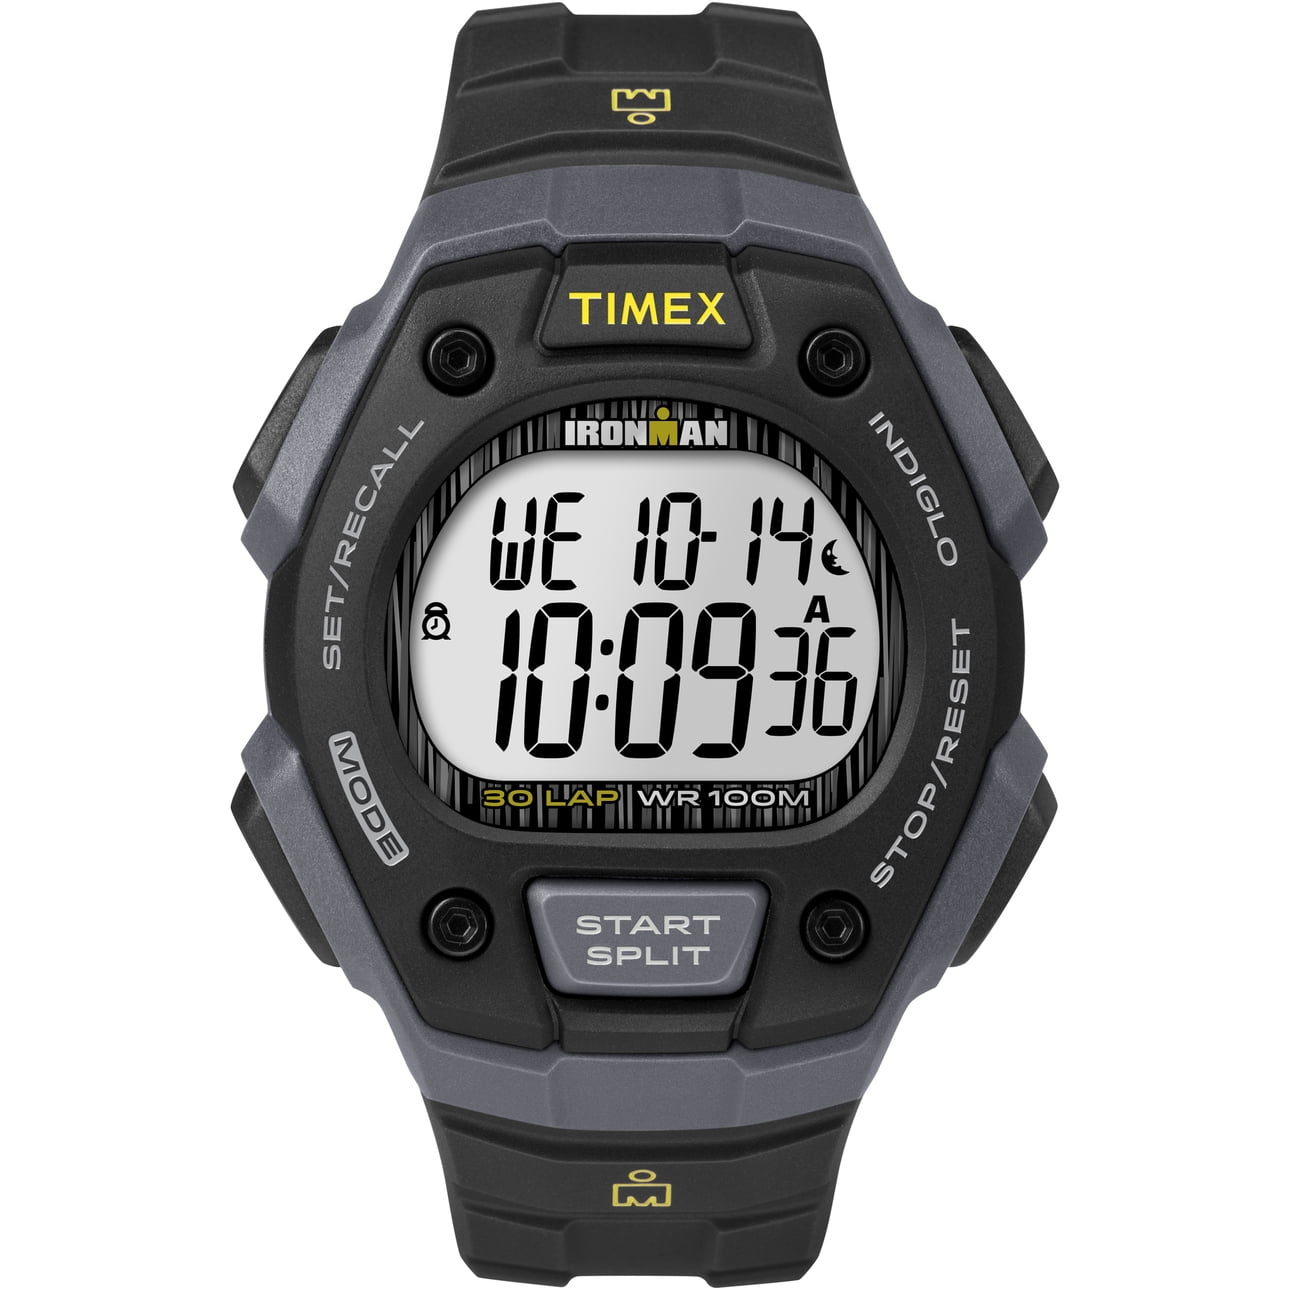 TIMEX Men's IRONMAN Classic 30 Black/Silver 38mm Sport Watch, Resin Strap